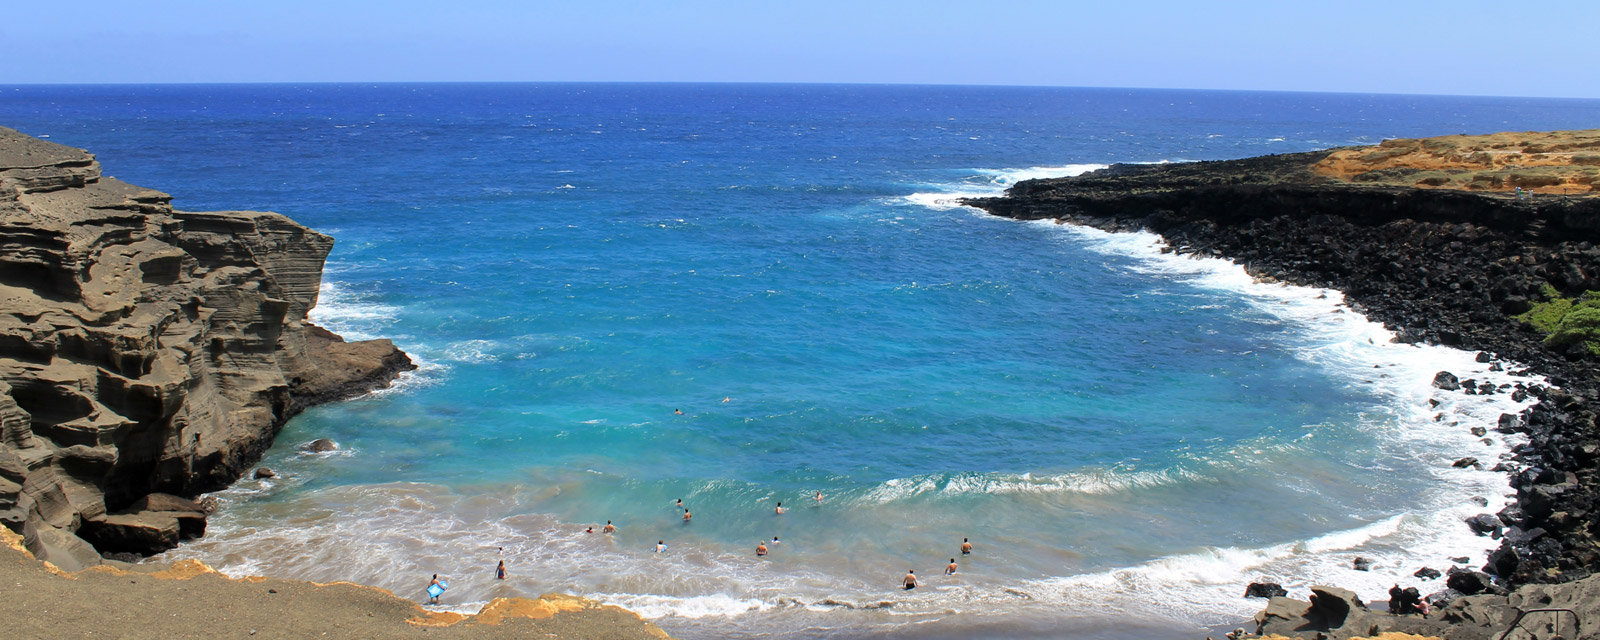 Banner photo showing a Hawaiian beach